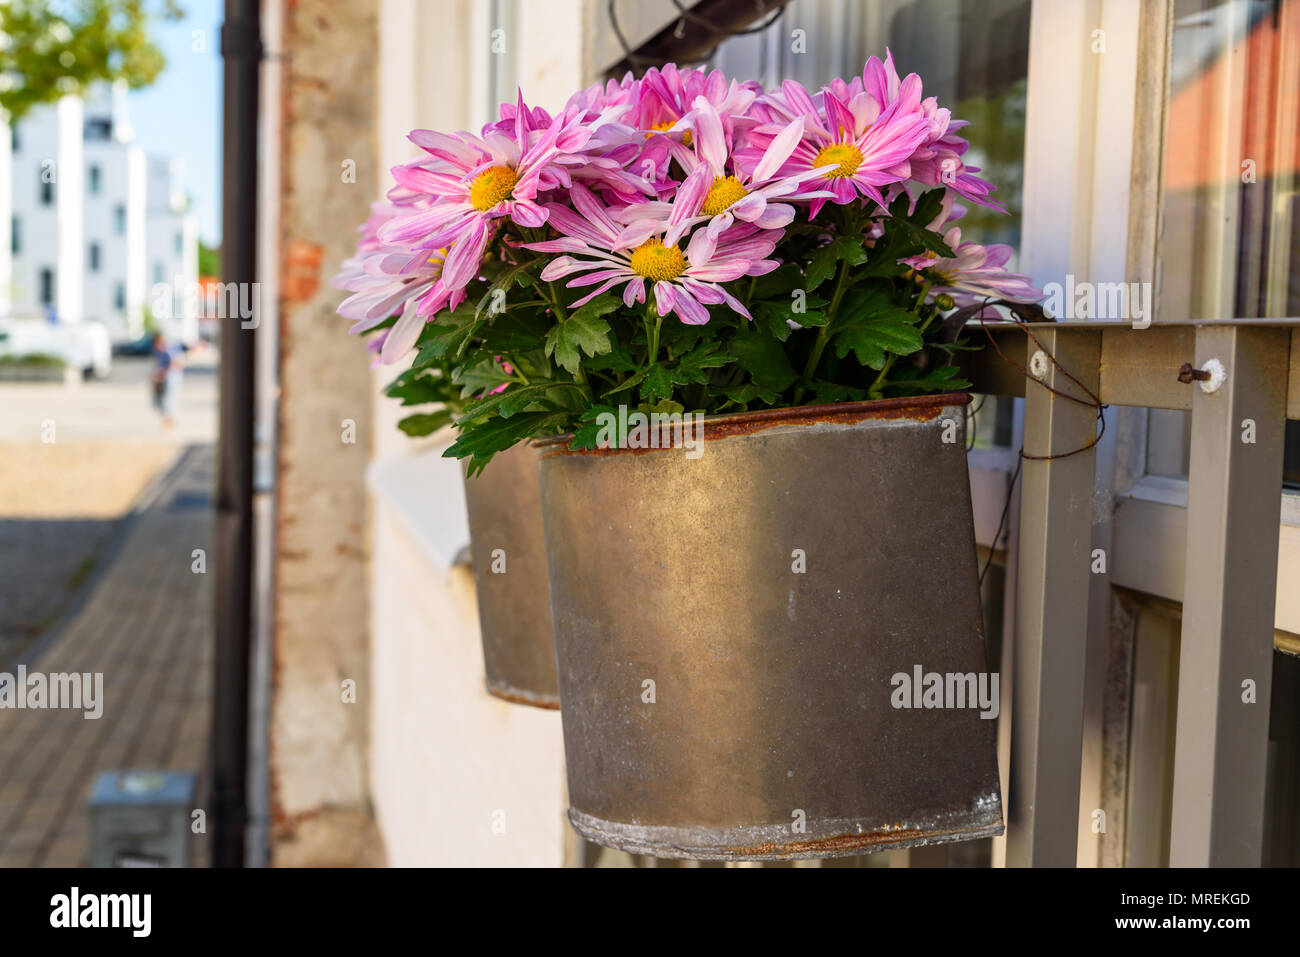 Pink flower (Dimorphotheca ecklonis) in metal flowerpots hanging outside window in a city. Stock Photo